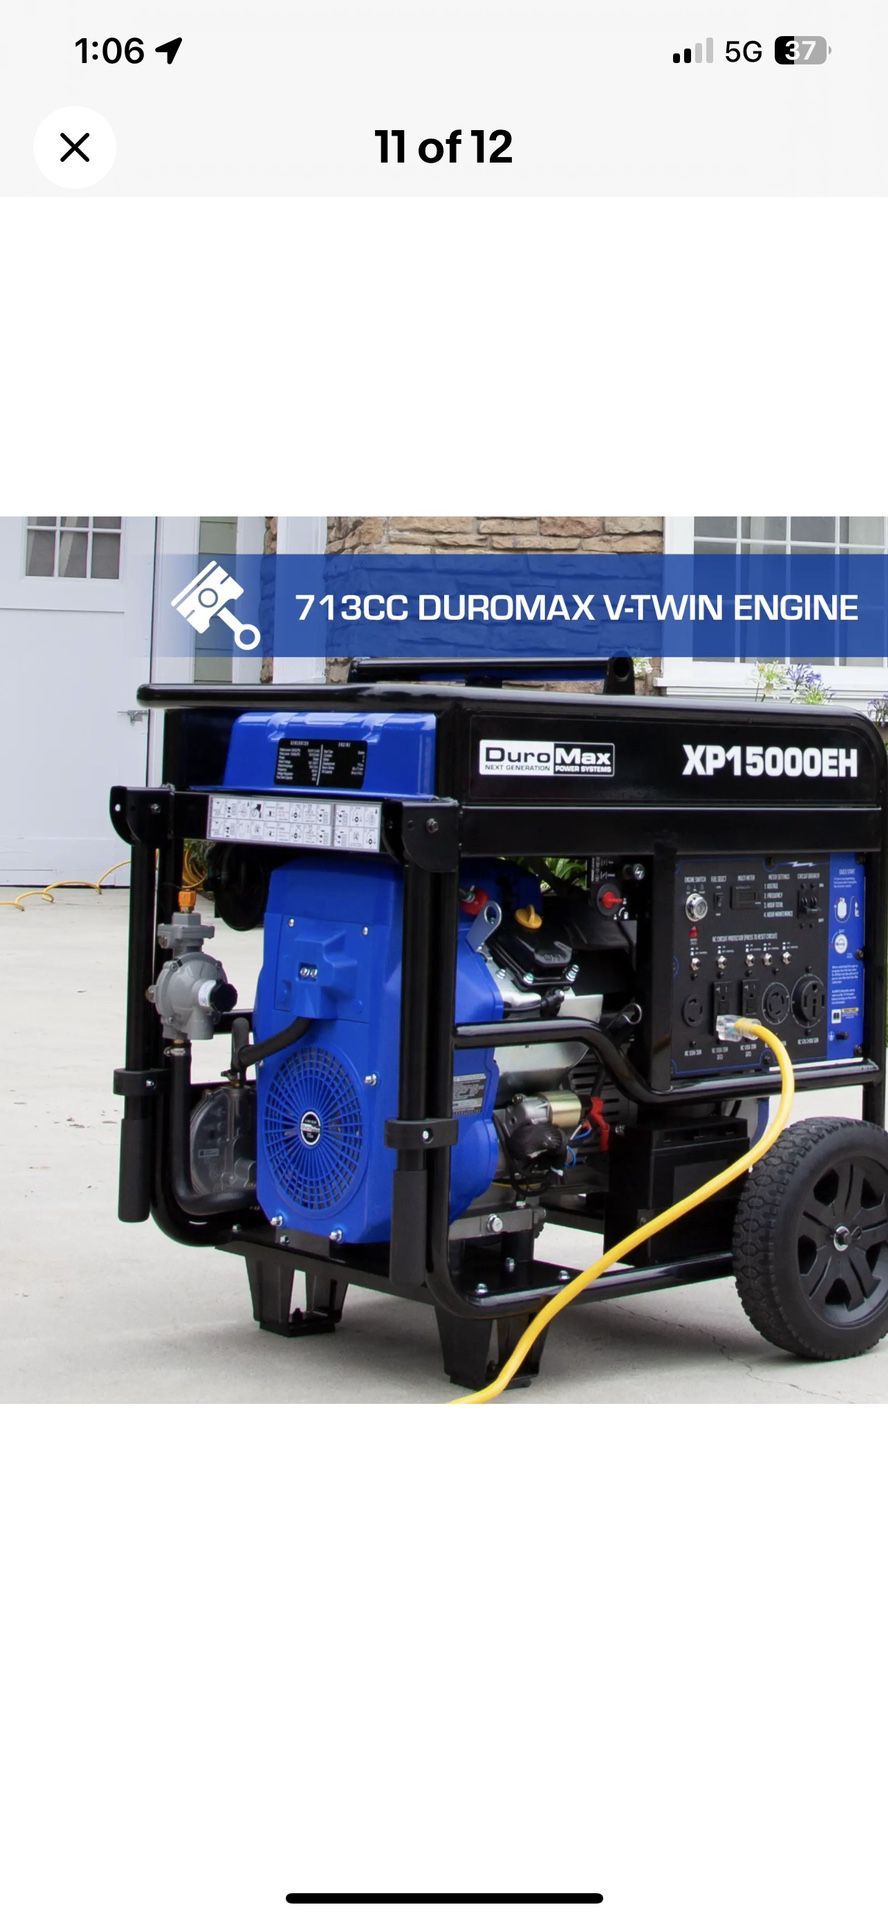 DuroMax Duel Fuel Generator XP1500EH